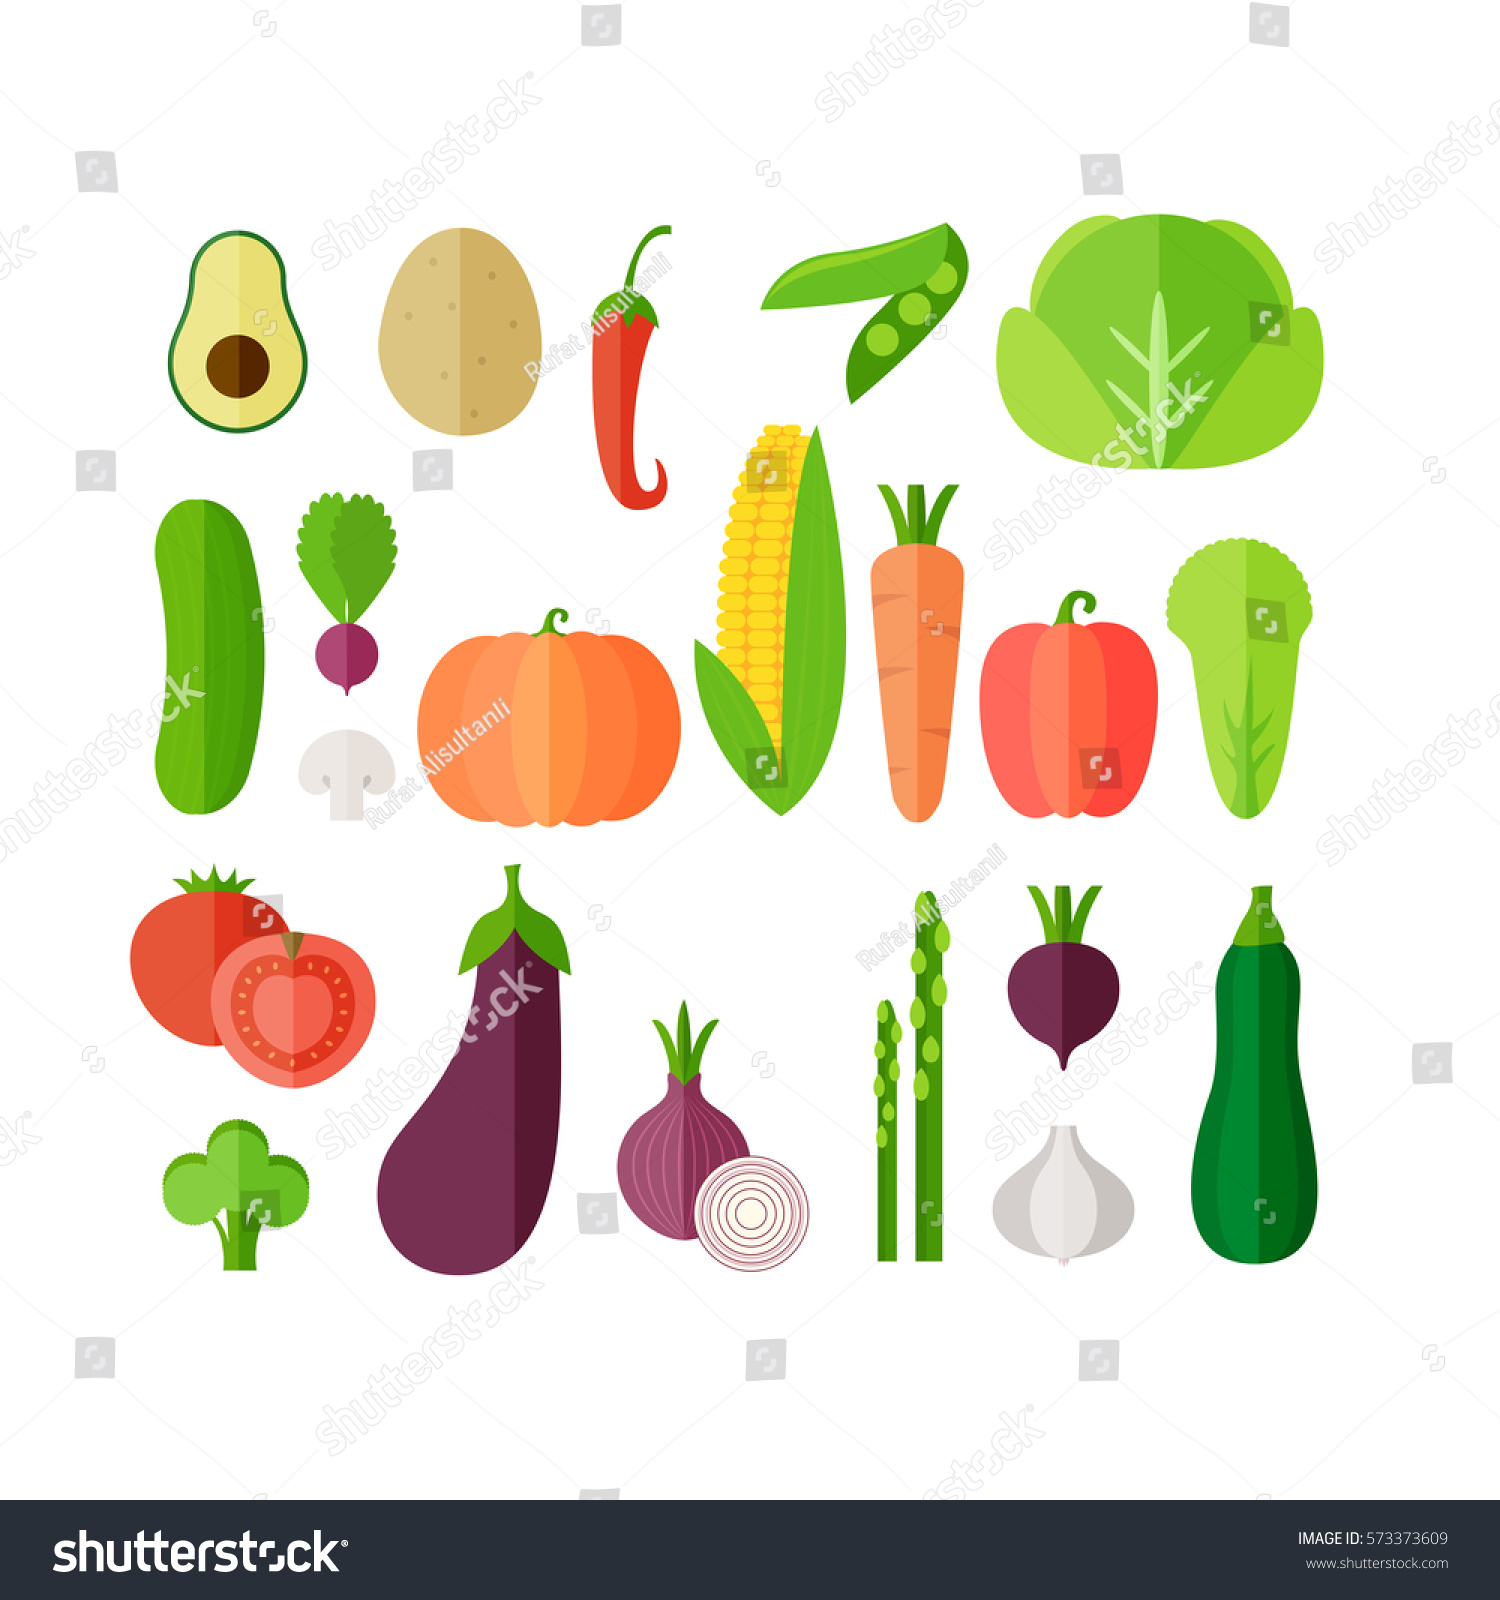 Vegetables flat icon set. Vector illustration #573373609